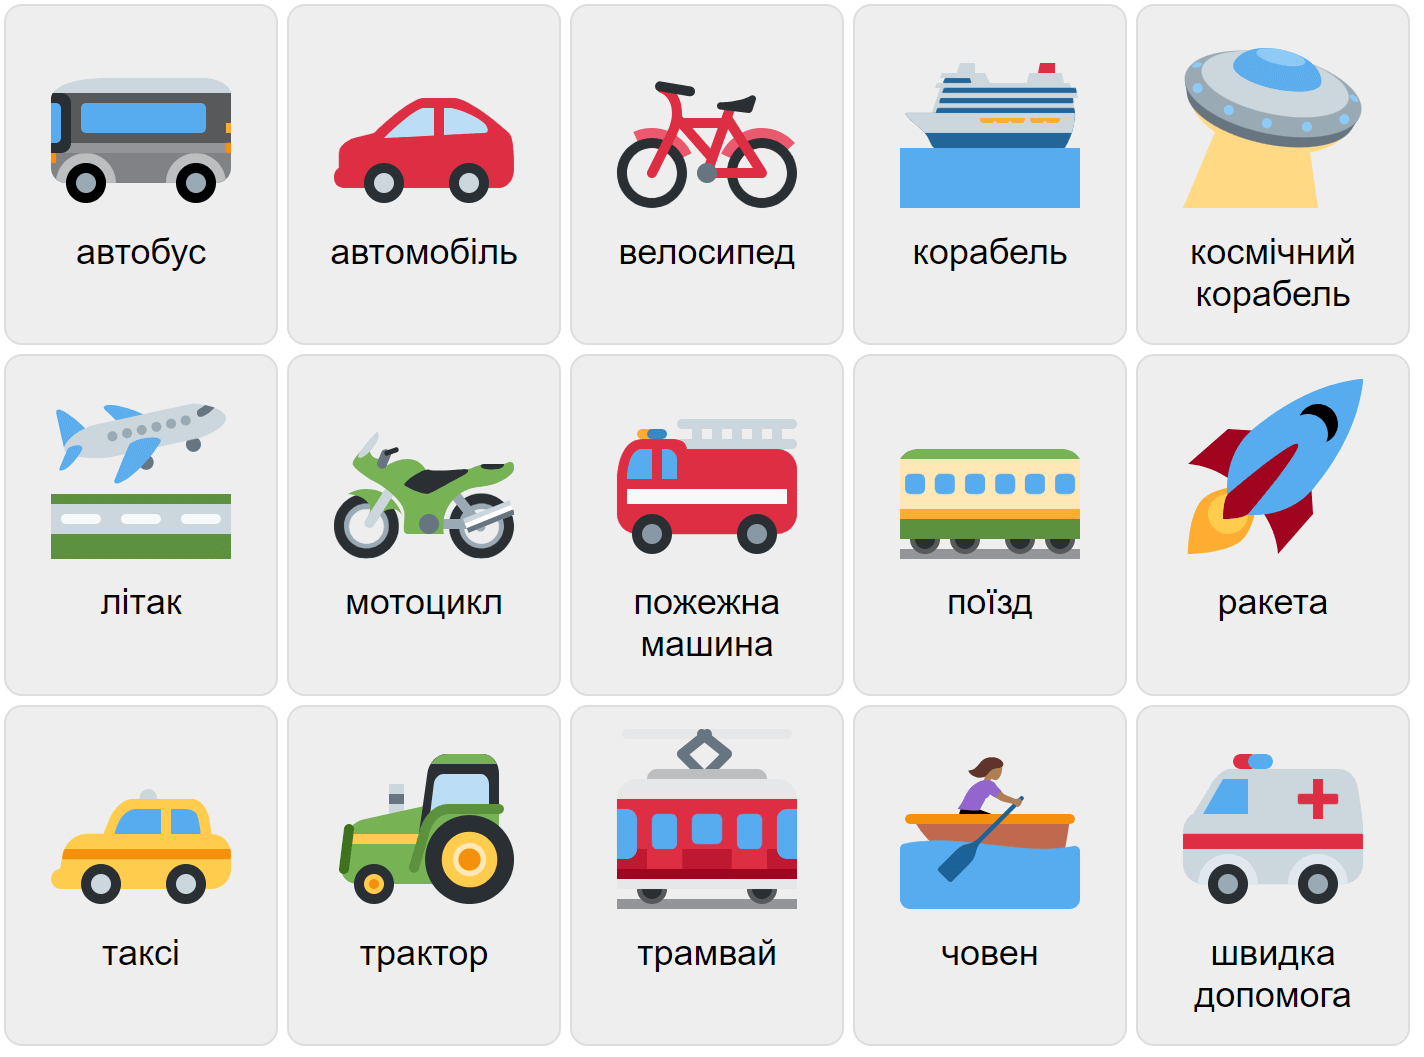 Transport in Ukrainian